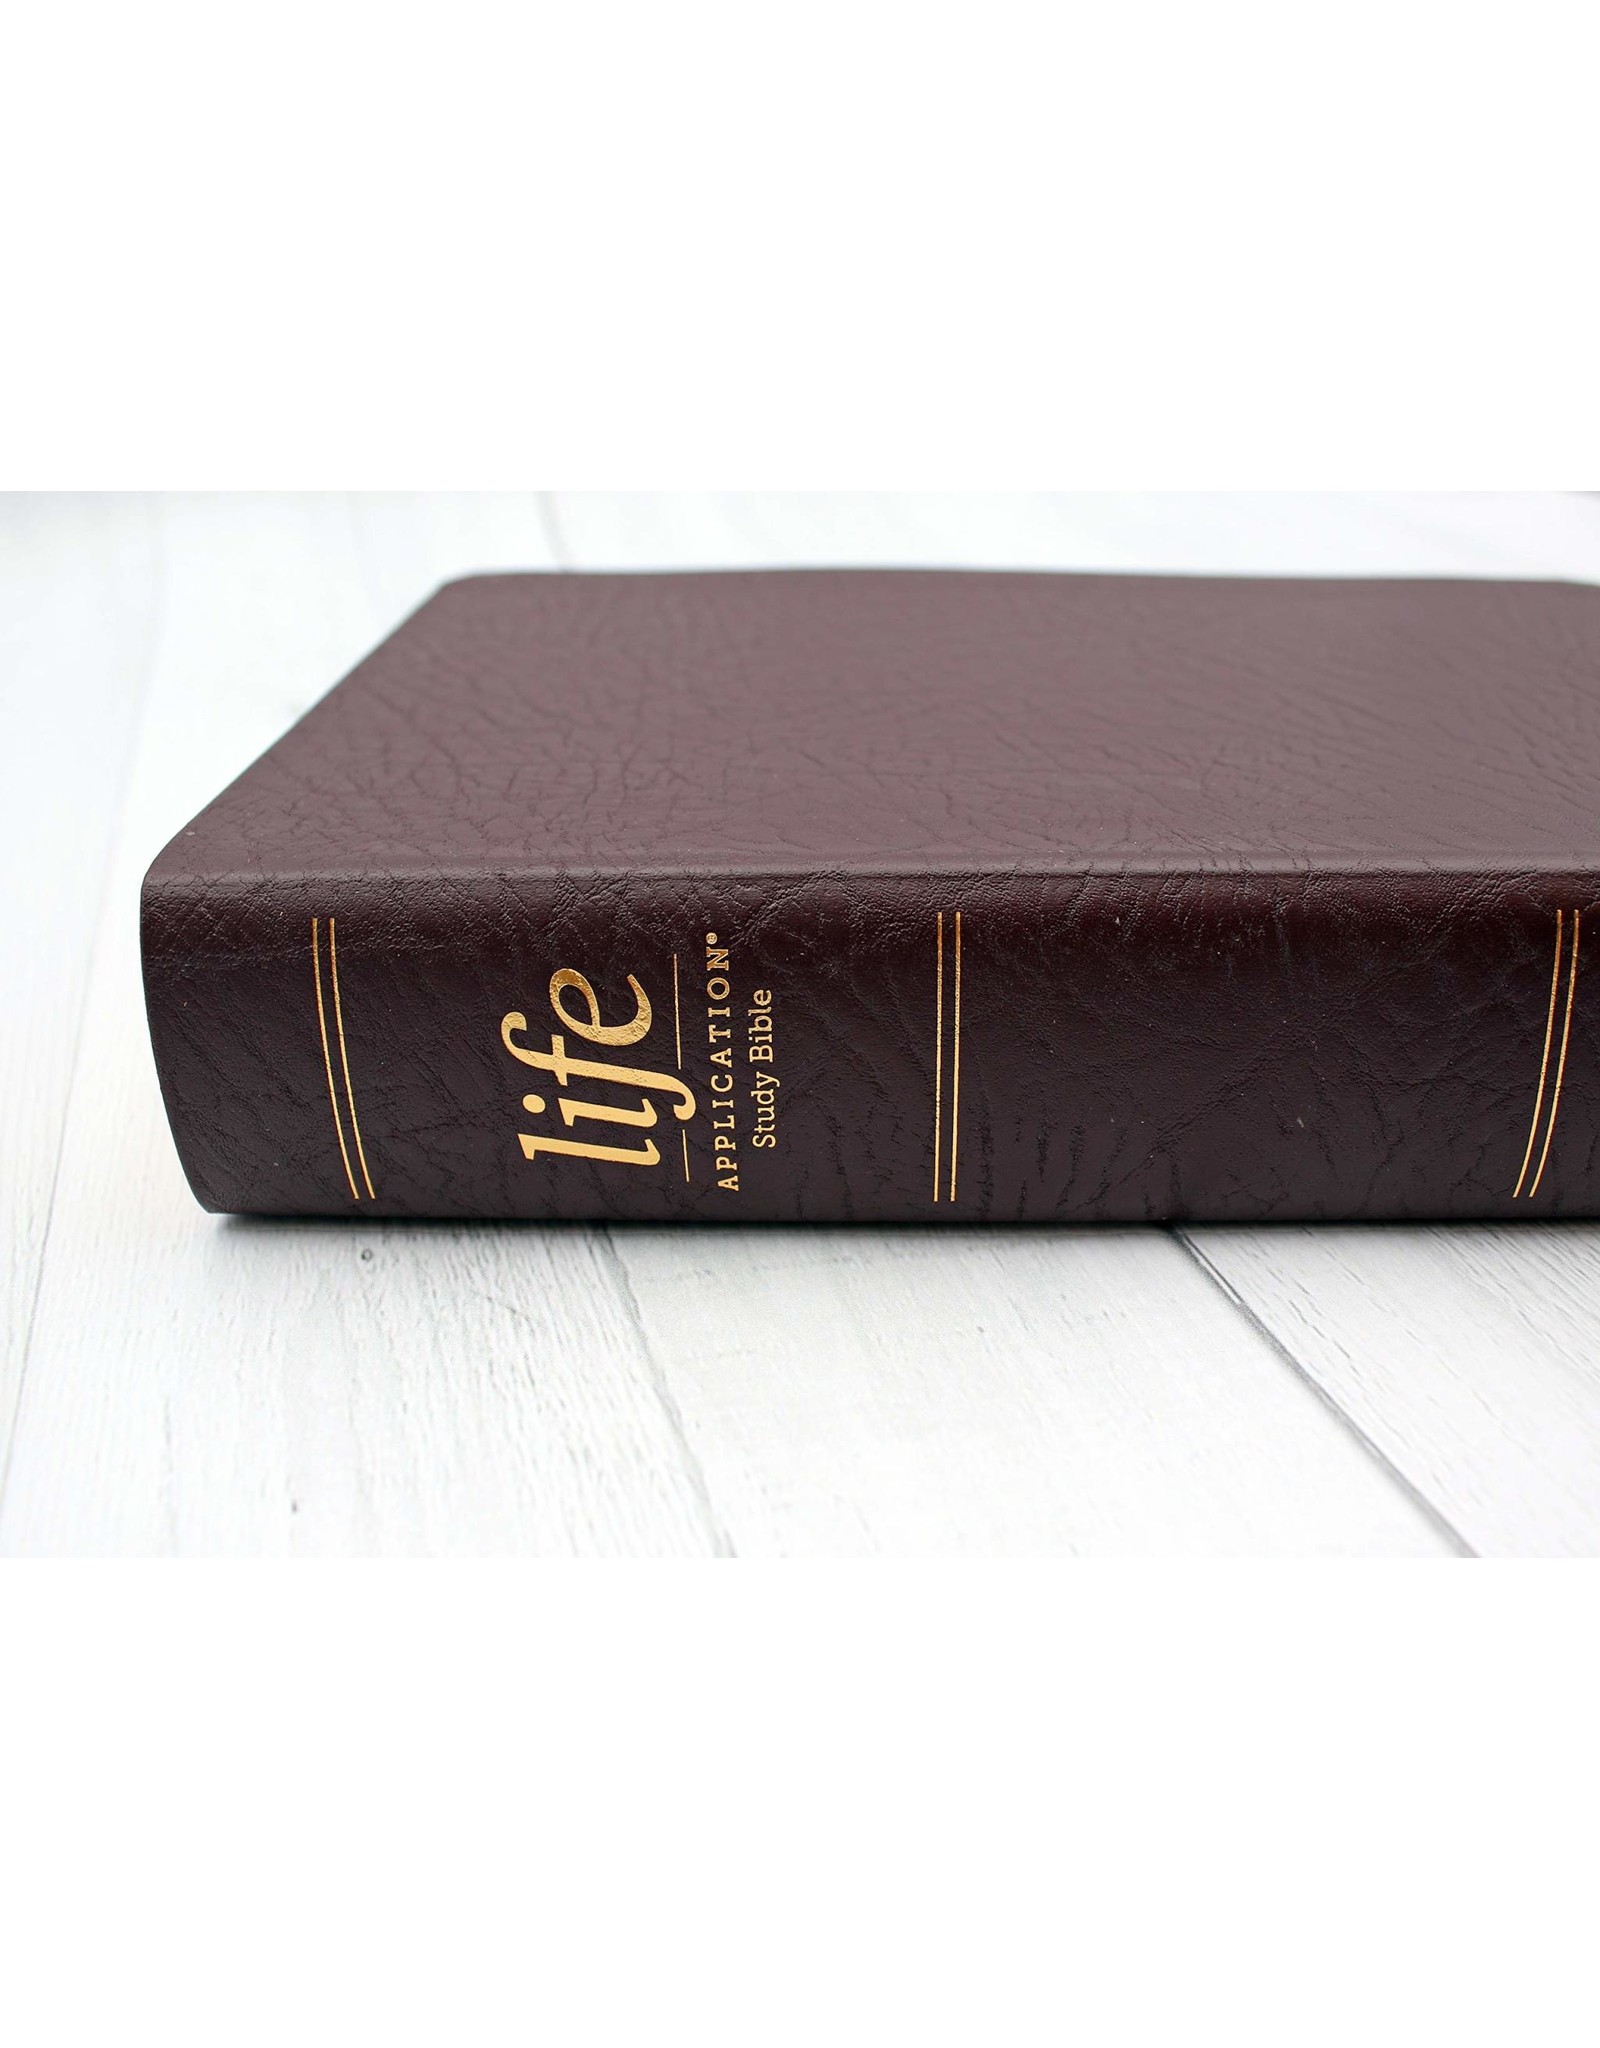 Zondervan NIV Life Application Burgundy Leather Study Bible